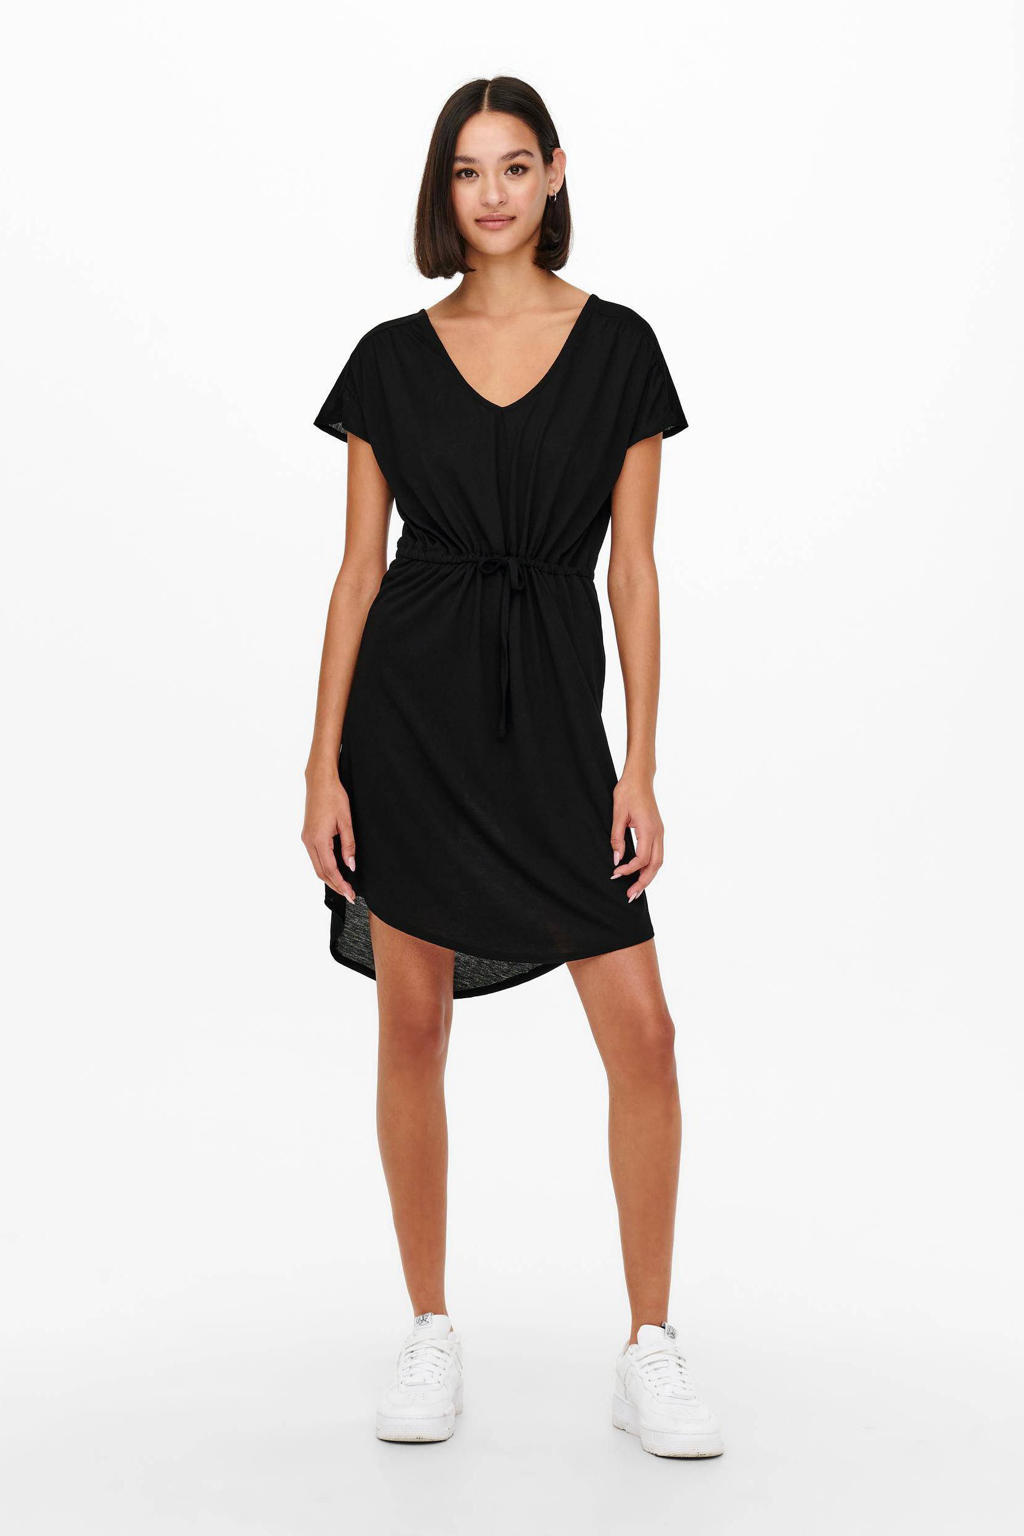 Zwarte dames JDY jurk van polyester met korte mouwen, V-hals, striksluiting en tunnelkoord